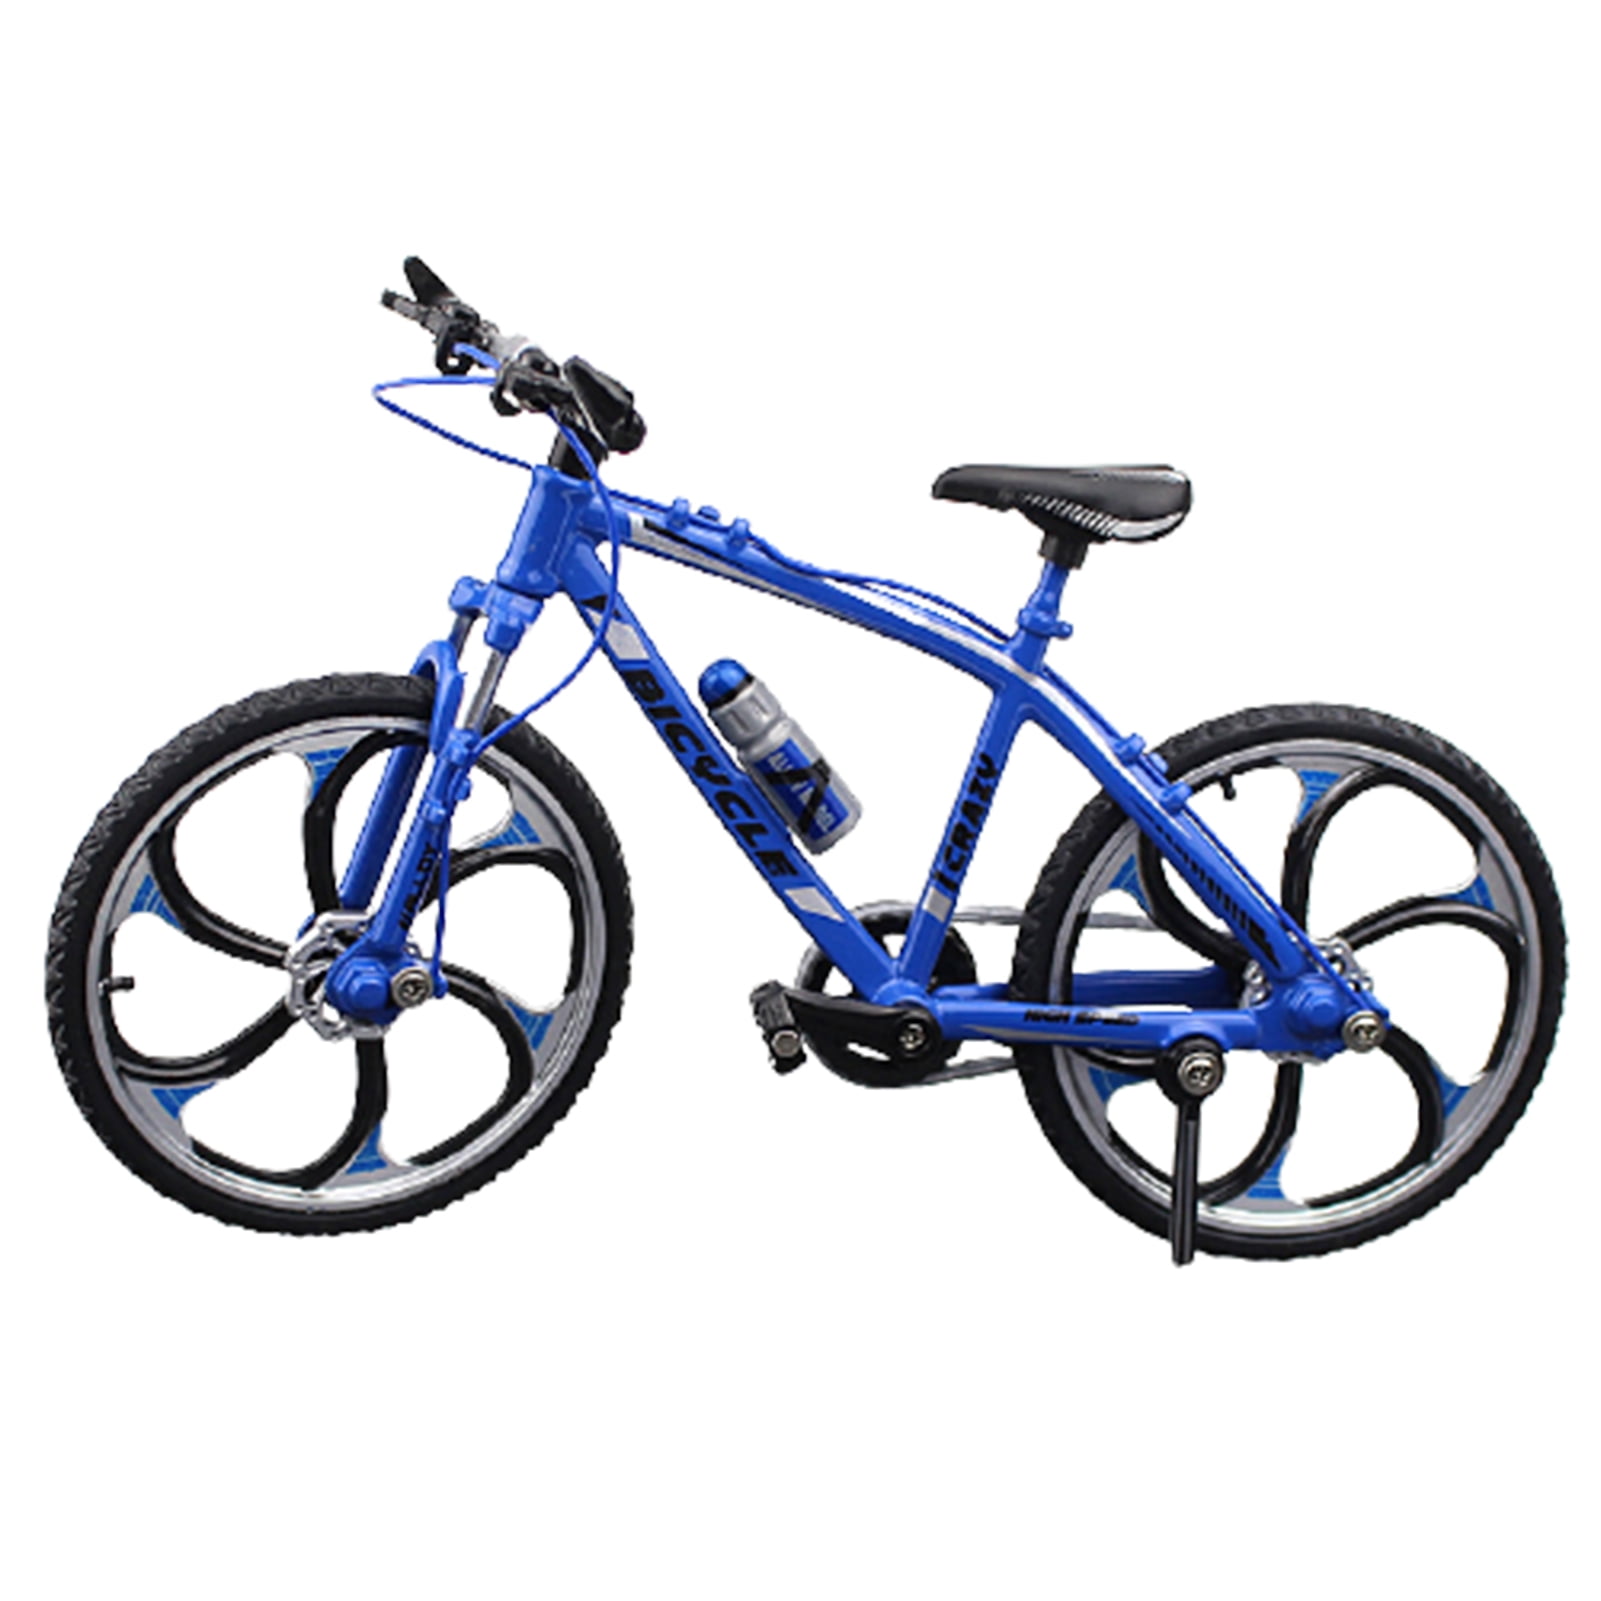 1/10 Mini Alloy Bicycle w/Basket Seat Bike Model Toy with Real Brake Green 